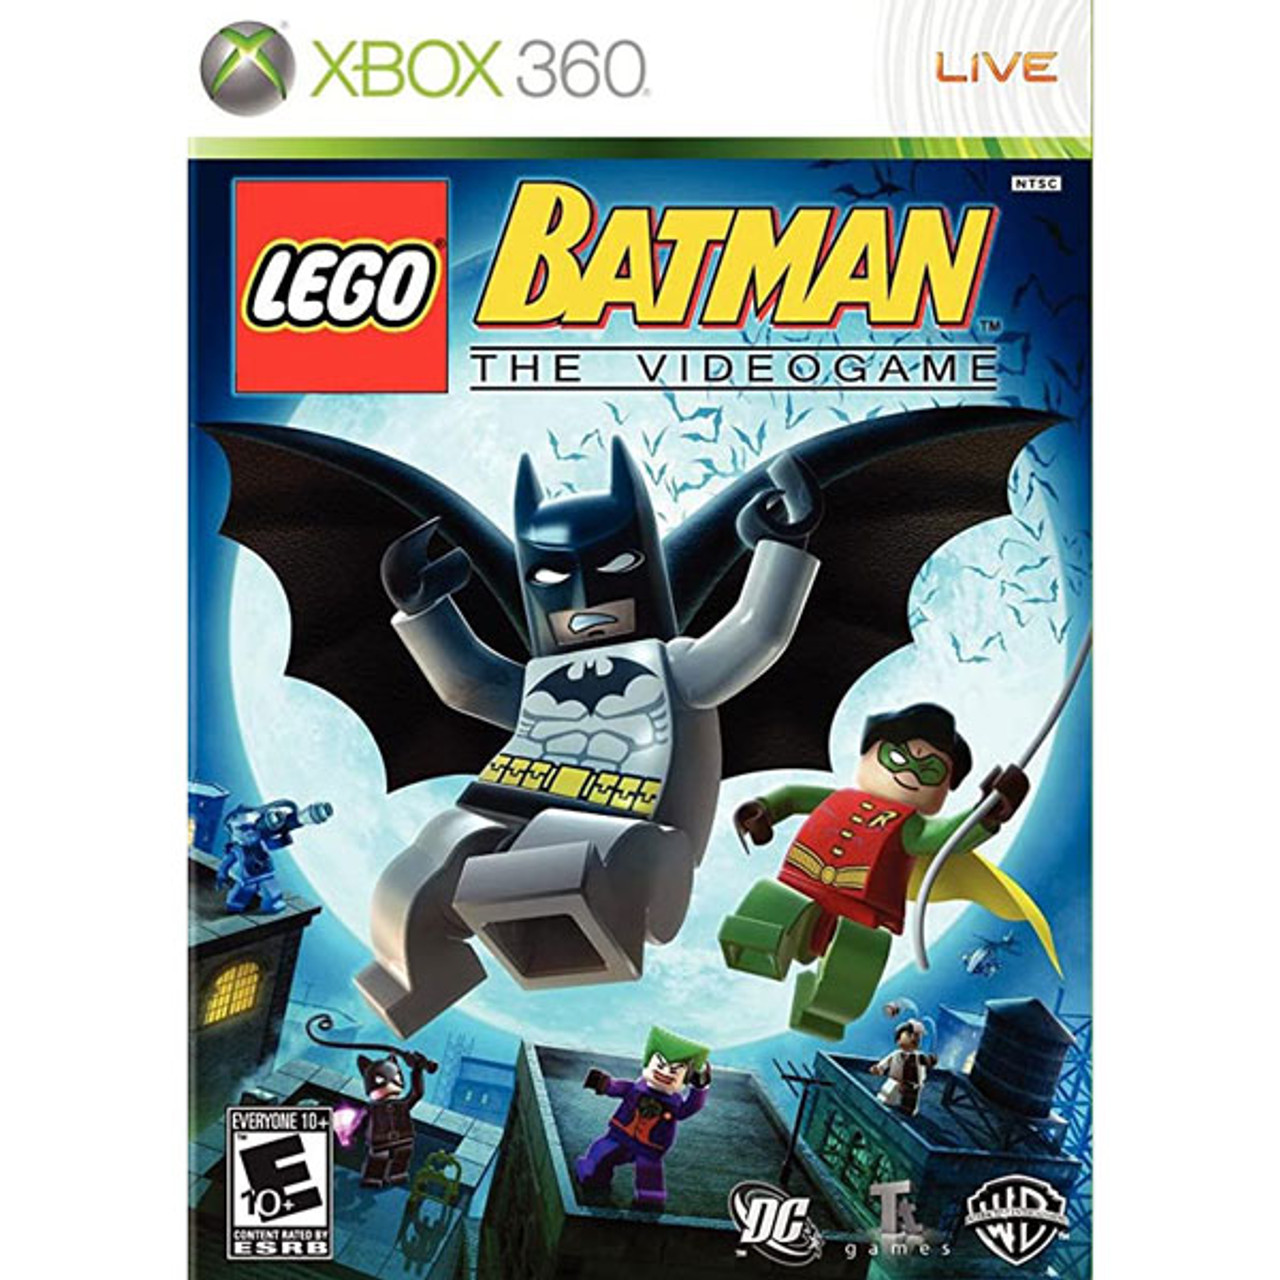 Revista Xbox 360 70 Oficial Lego Batman 2 Detonado